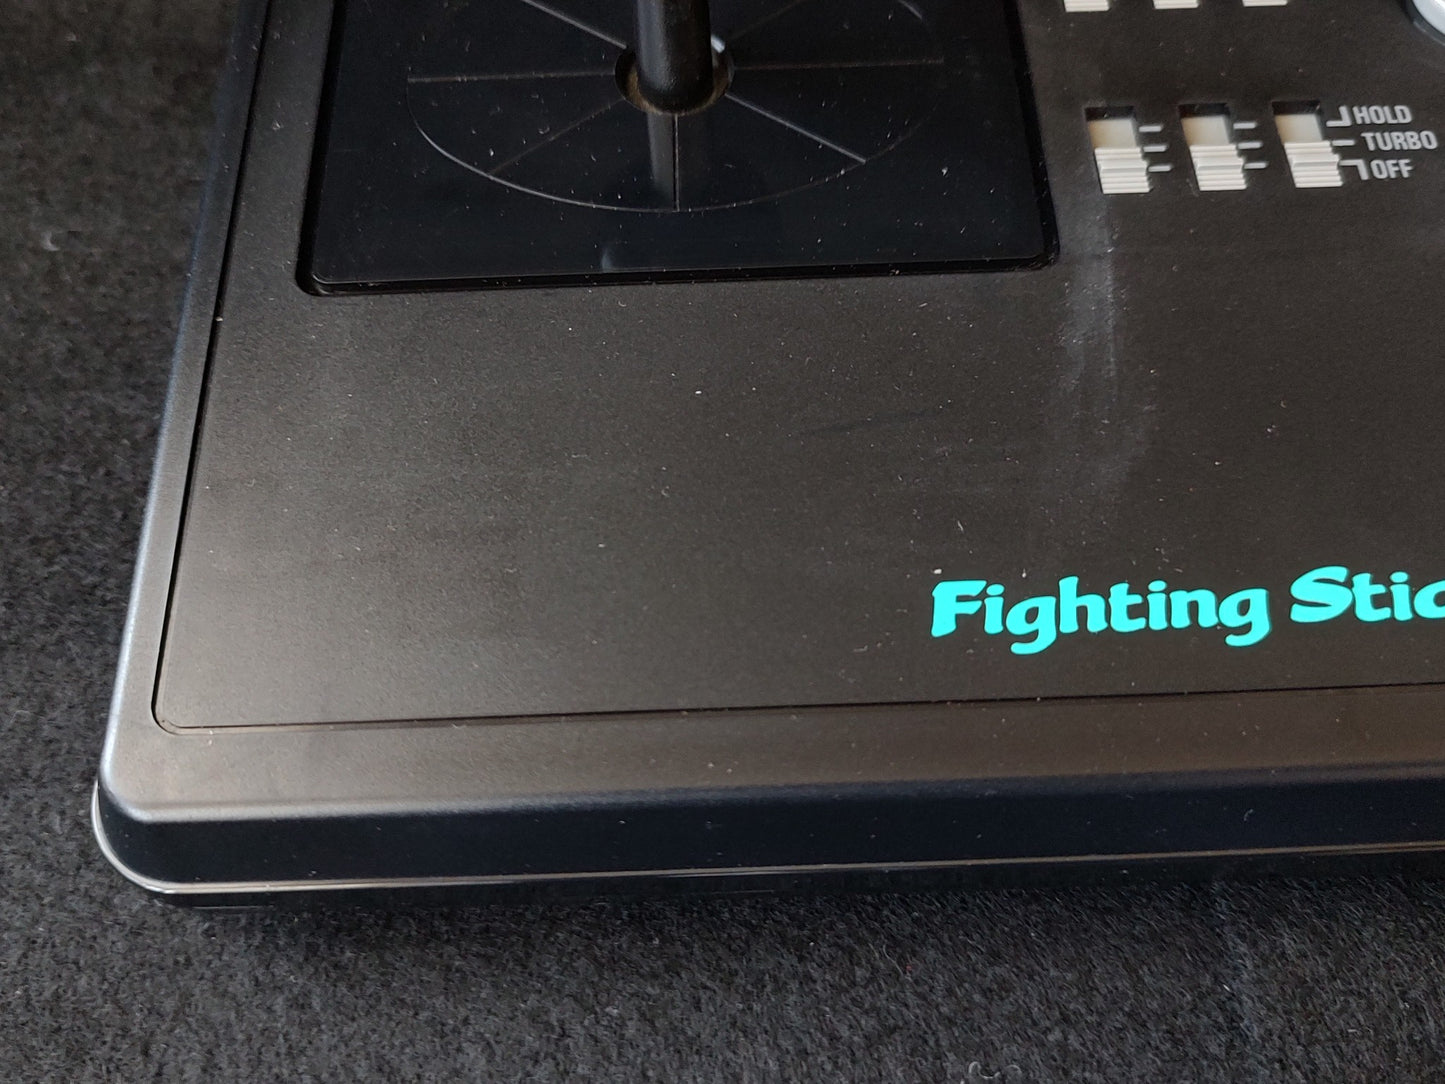 Hori Arcade Fighting Stick Multi for SNES, PC Engine, Megadrive Boxed set-f0816-